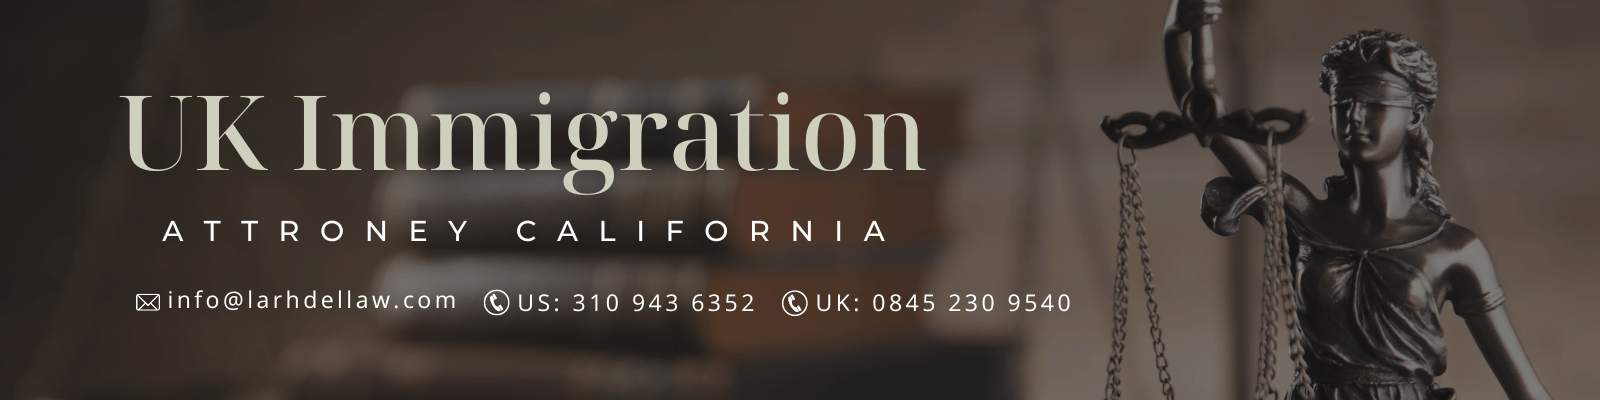 UK Immigration Attorney California